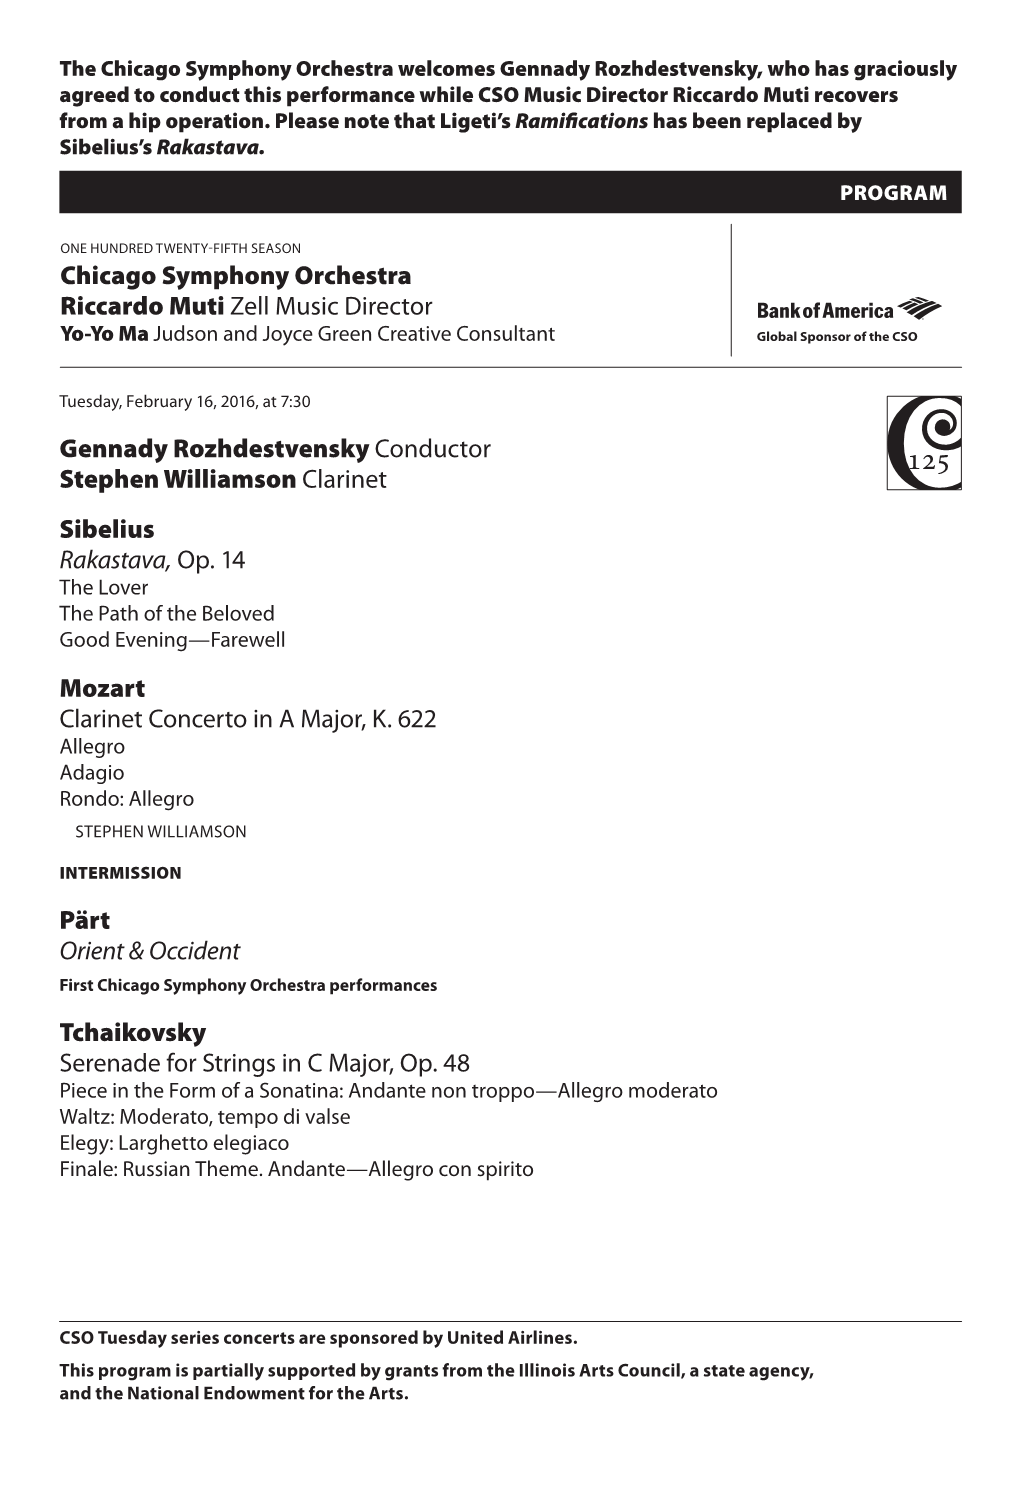 Chicago Symphony Orchestra Riccardo Muti Zell Music Director Gennady Rozhdestvensky Conductor Stephen Williamson Clarinet Sibeli